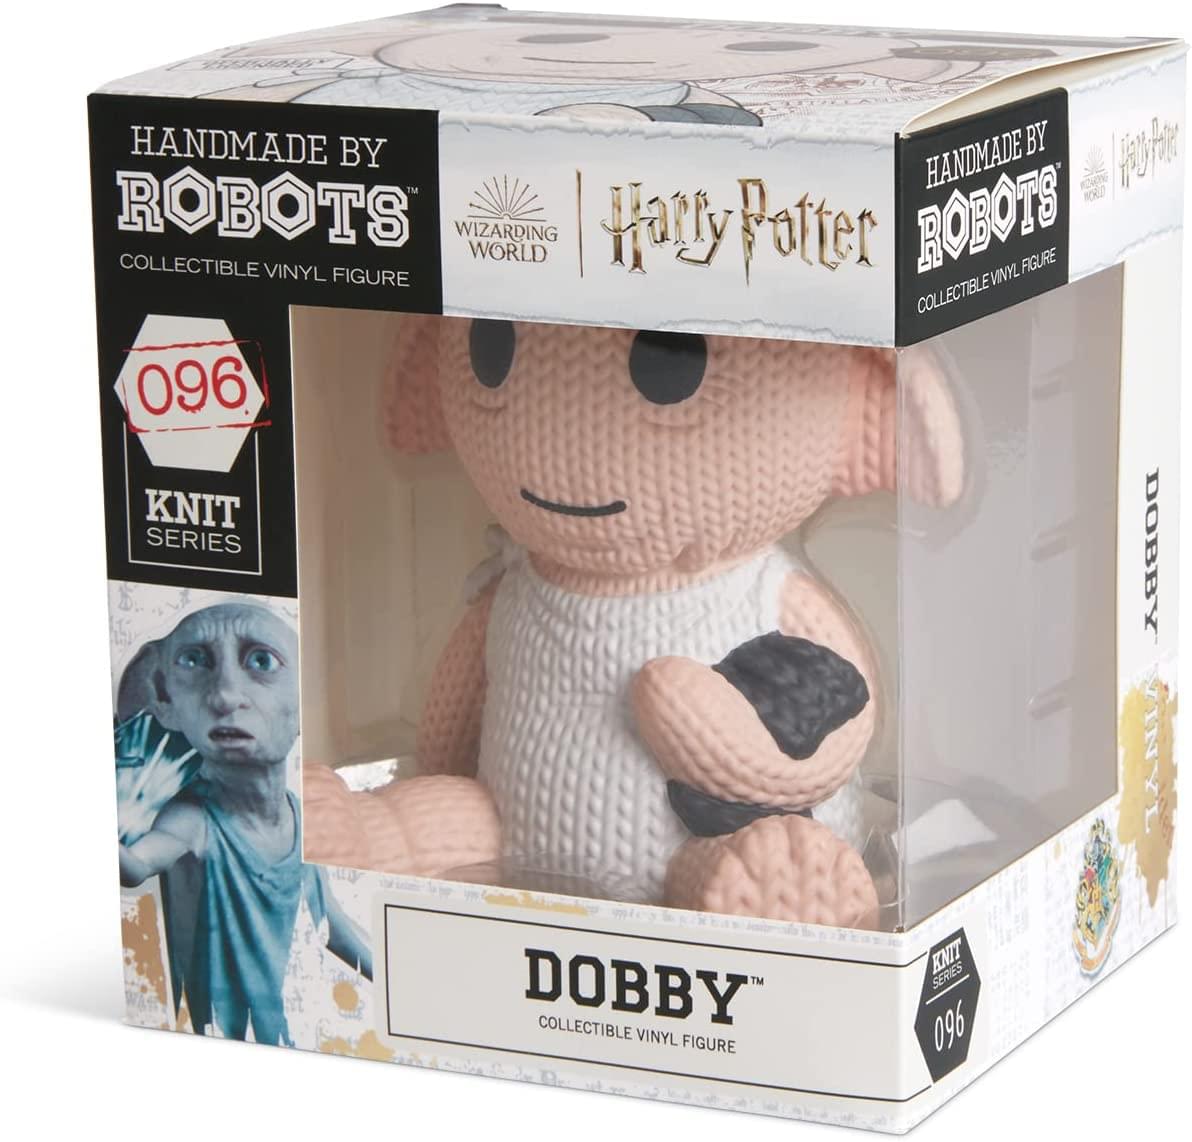 Harry Potter Handmade by Robots Vinyl Figure | Dobby